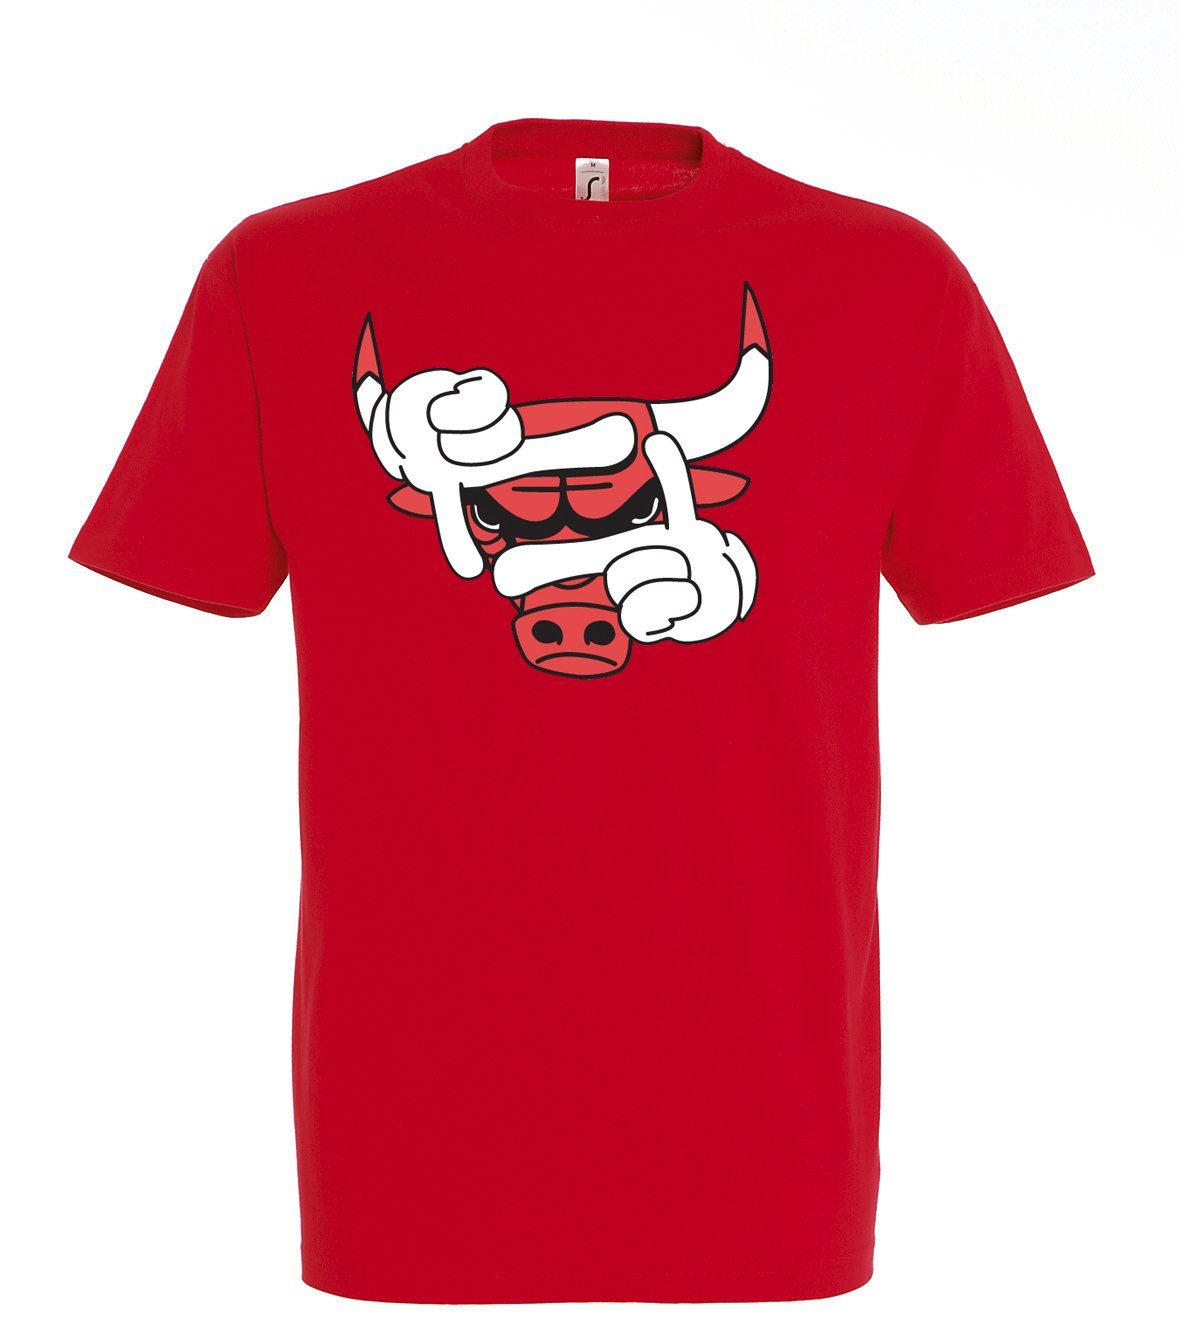 Designz modischem Youth Sport Herren Bulls T-Shirt mit Frontprint T-Shirt Rot